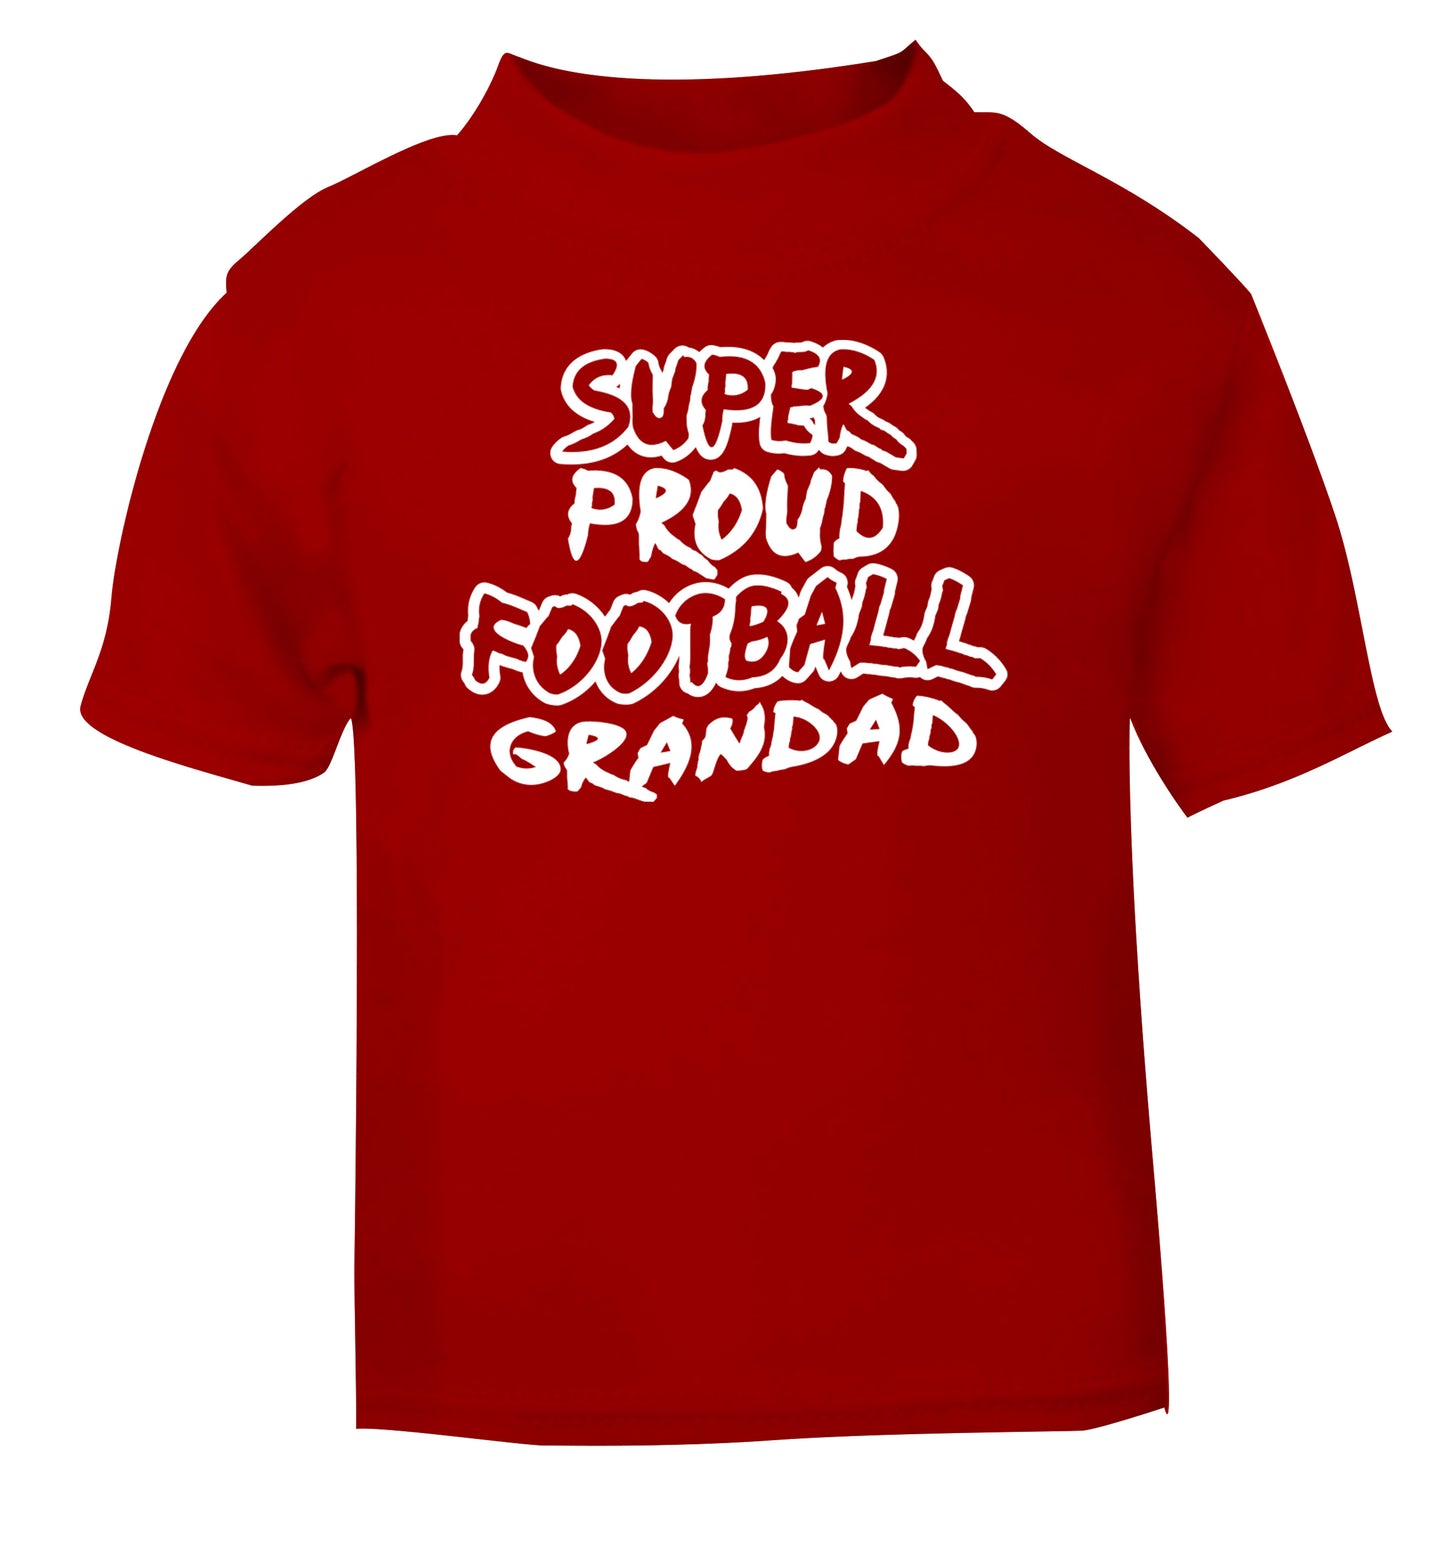 Super proud football grandad red Baby Toddler Tshirt 2 Years